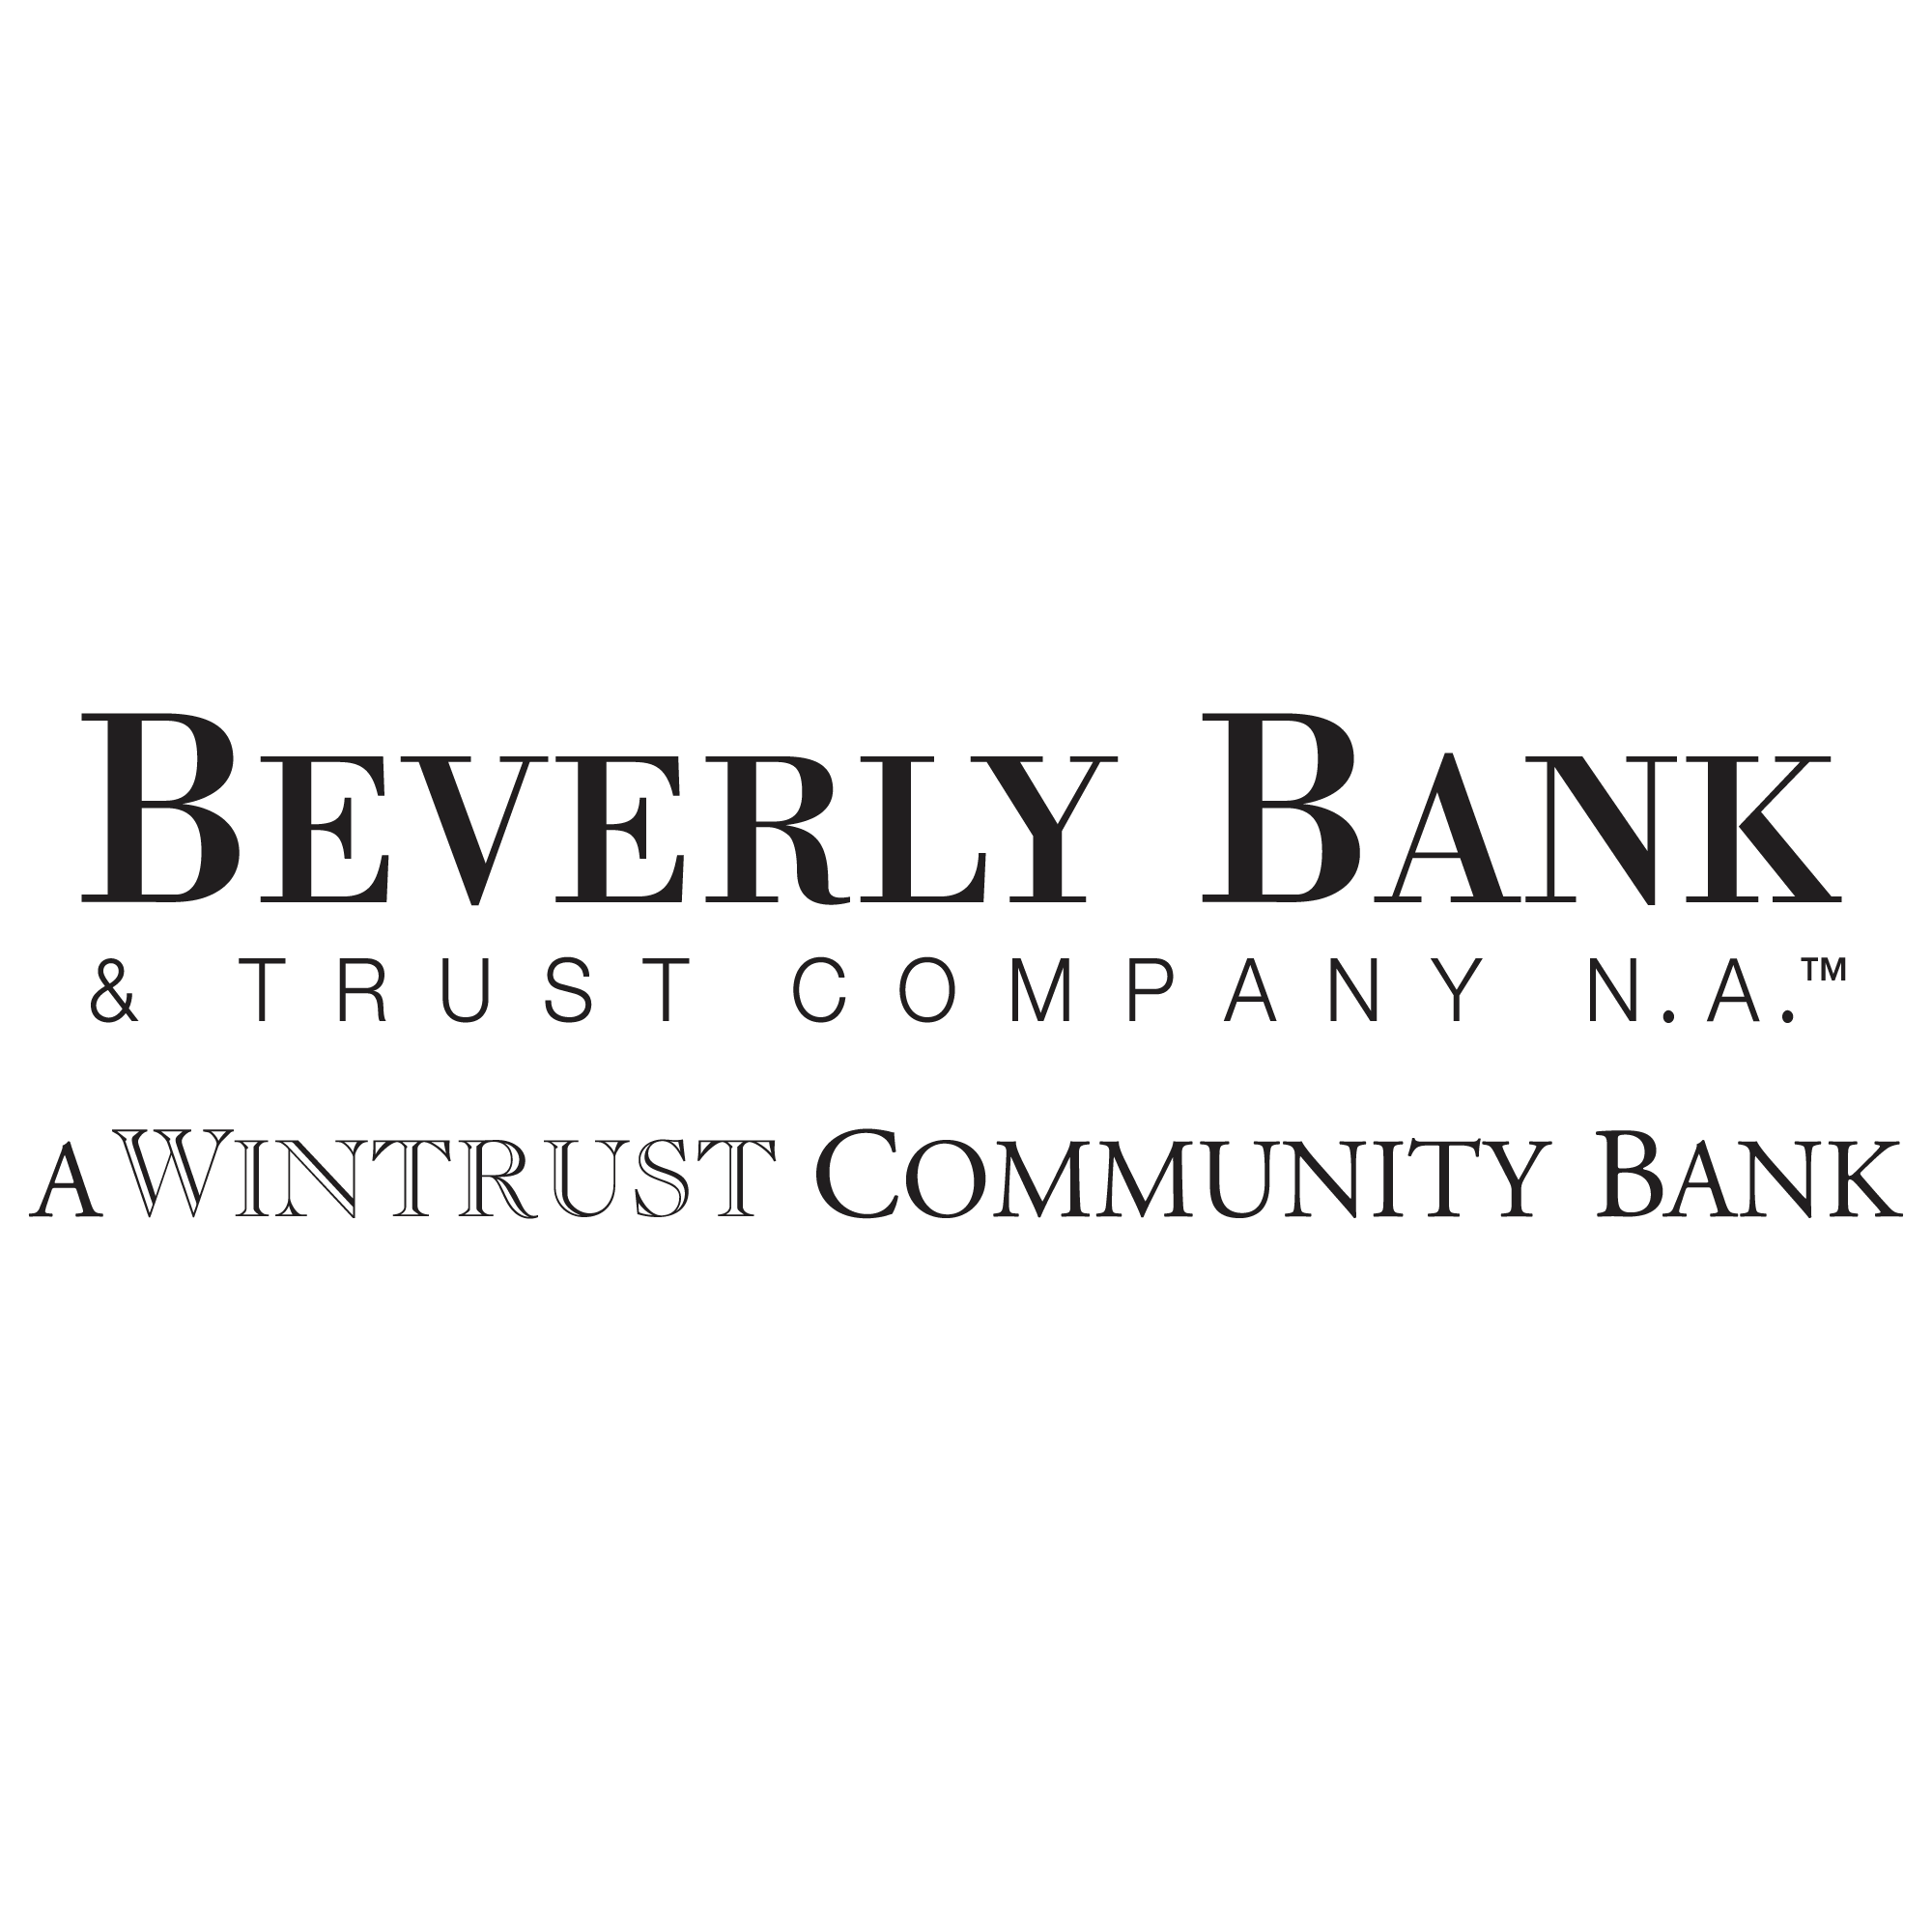 Beverly Bank & Trust